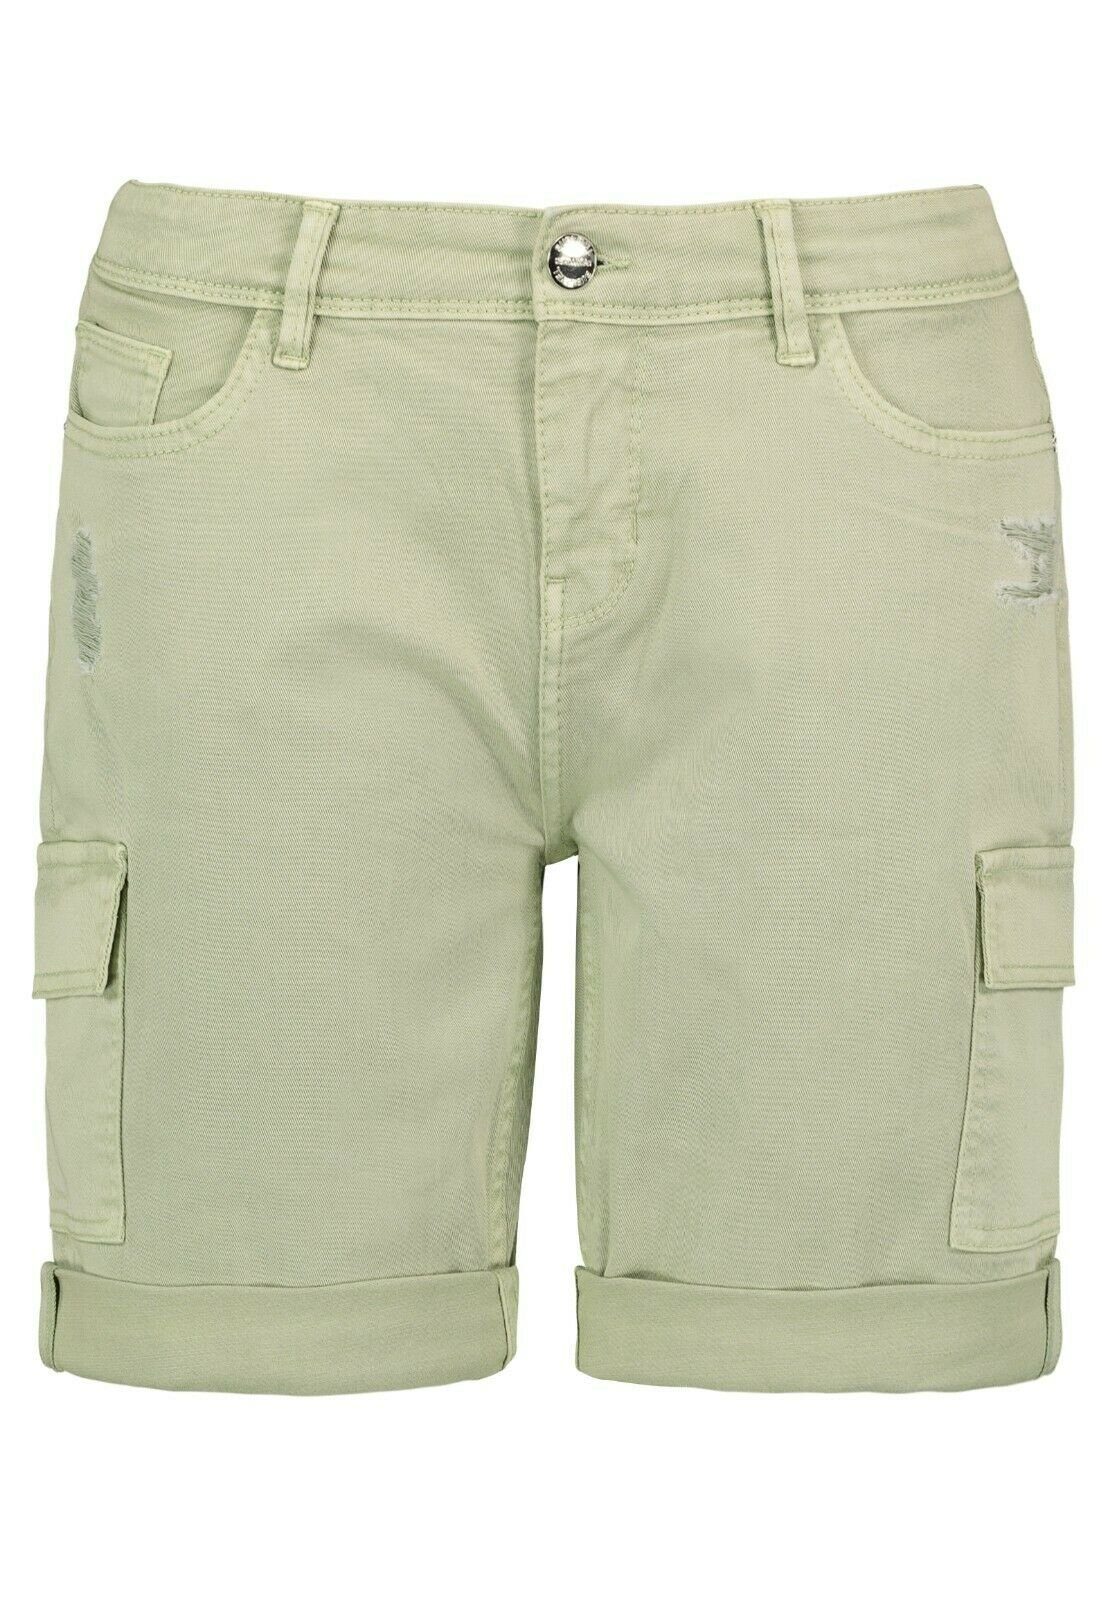 Kurze Bermuda Shorts green Cargo Short Bermudas Denim Damen Stretch Hose Denim cloudy SUBLEVEL Shorts